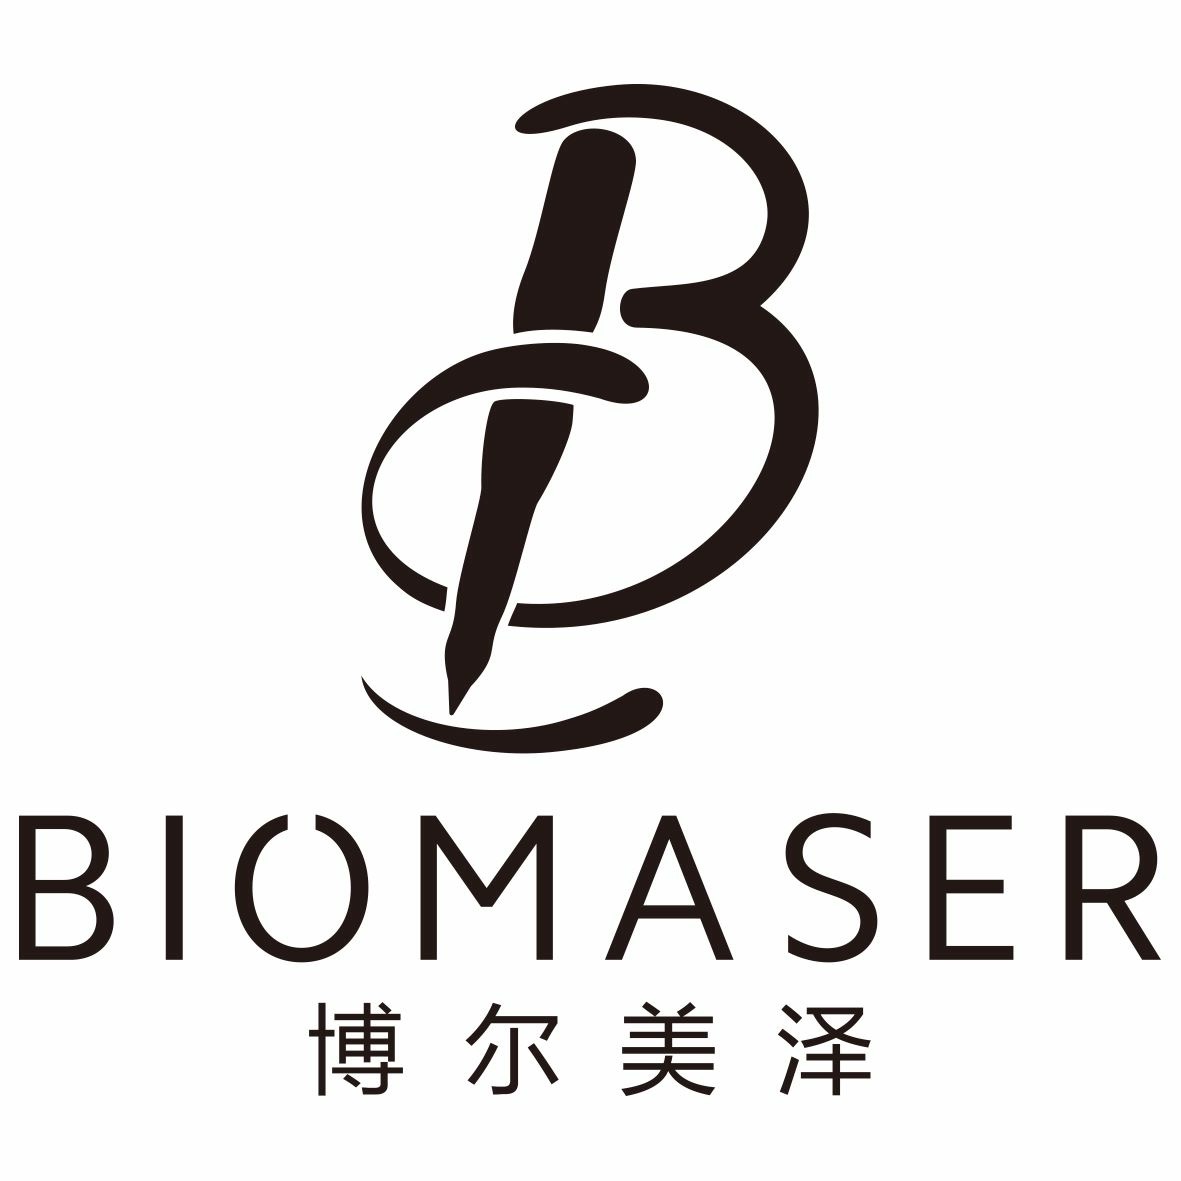 fms_biomaser_pmu